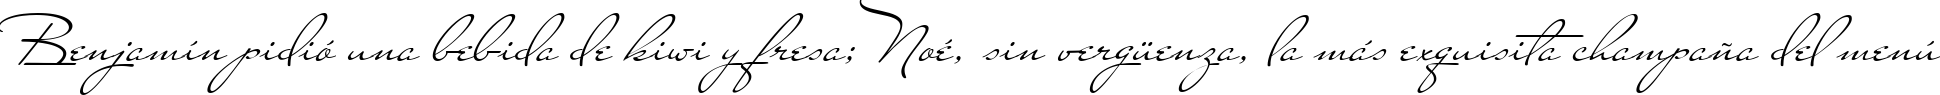 Пример написания шрифтом Carolina текста на испанском